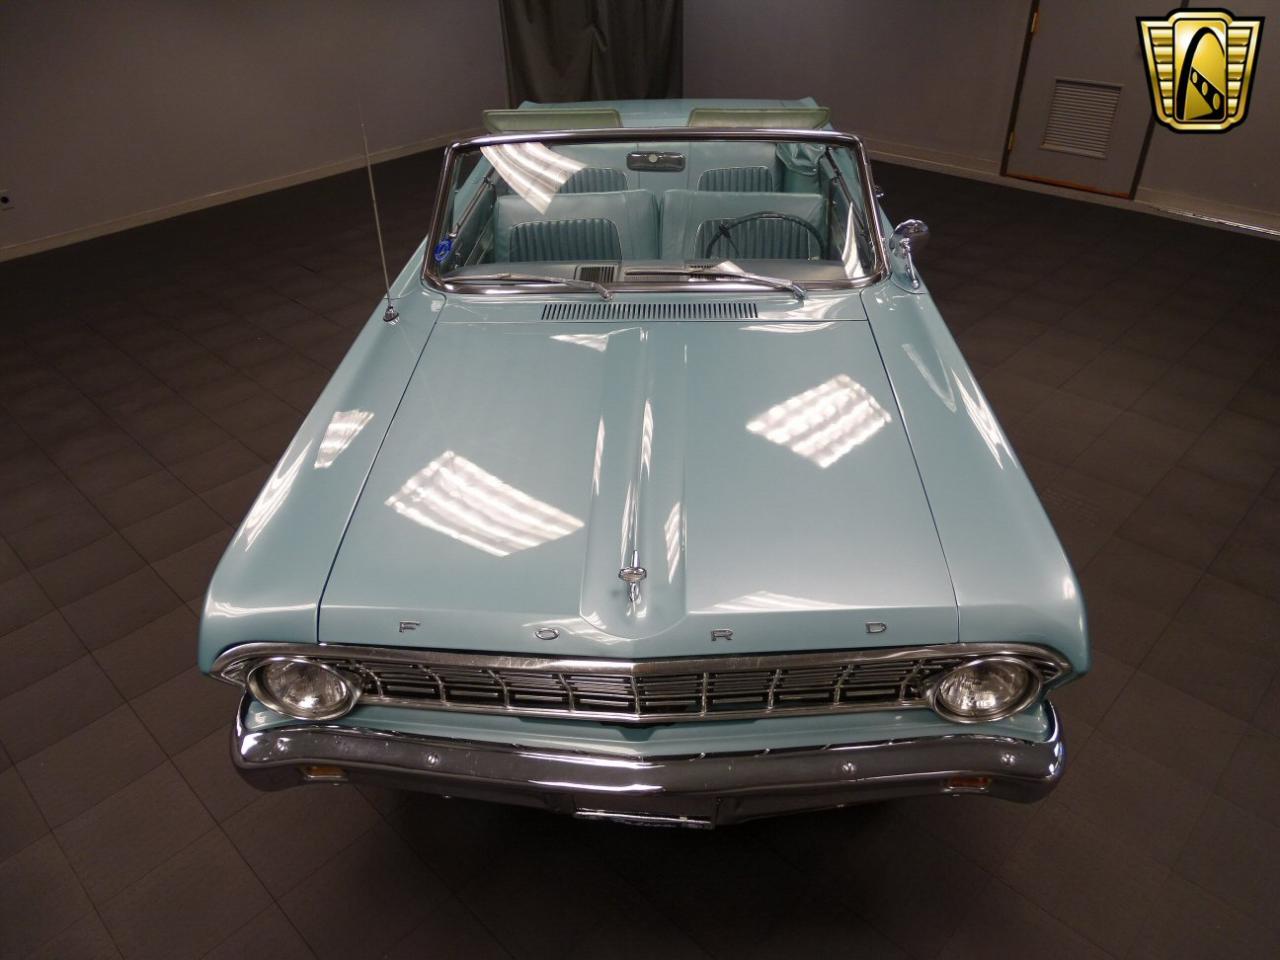 1964 Ford Falcon | Detroit, Michigan | DET 811